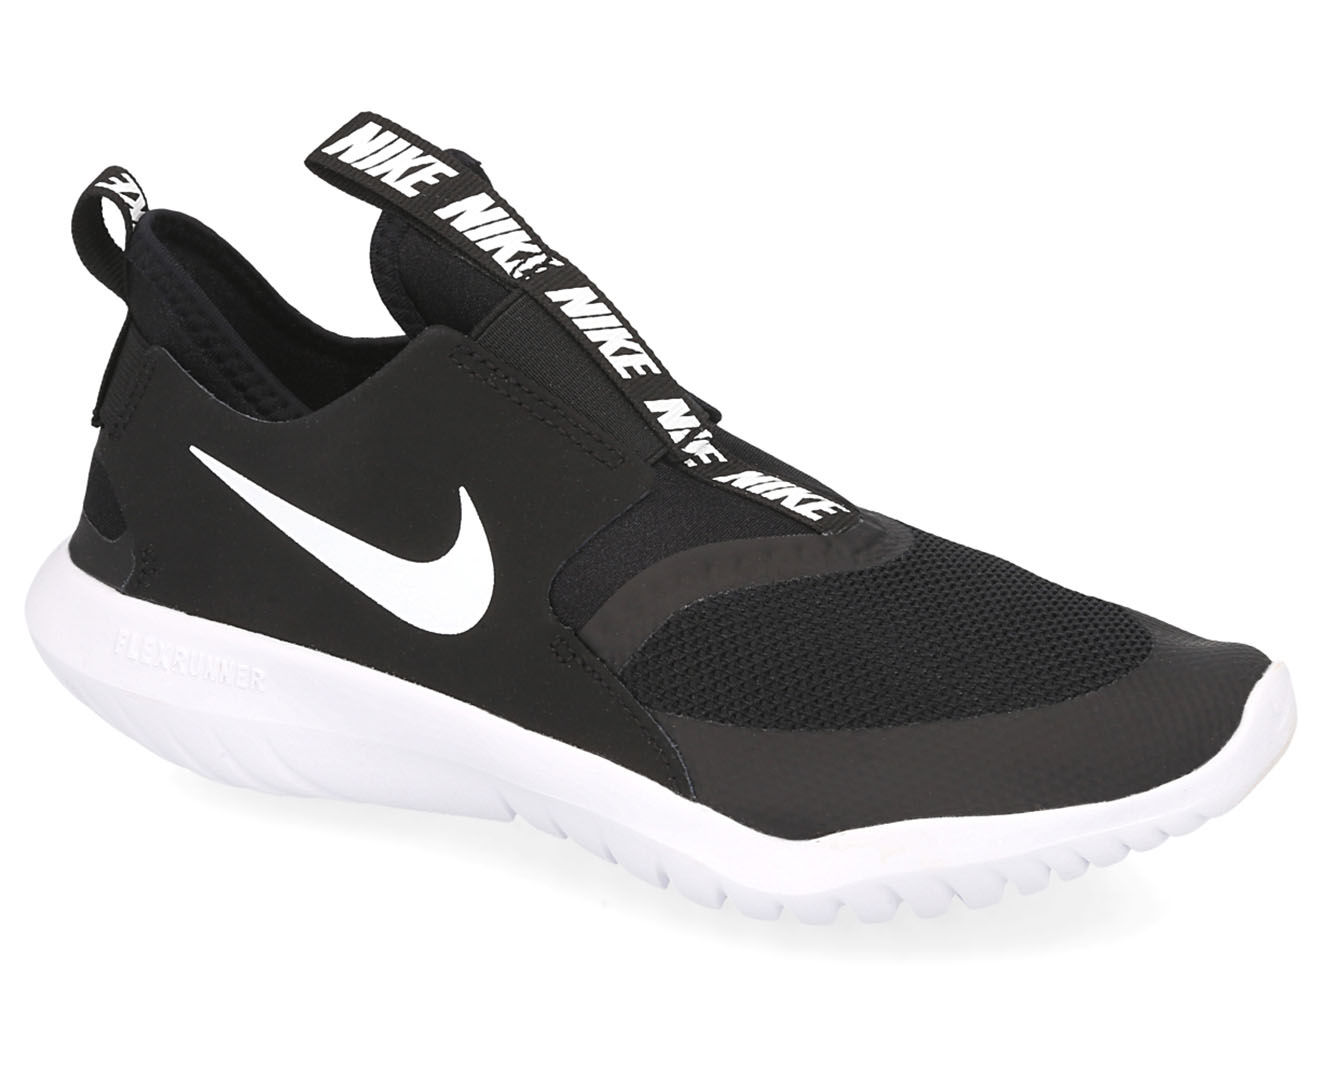 Nike Boy's Grade-School Flex Runner Sports Shoes - Black/White | Catch ...